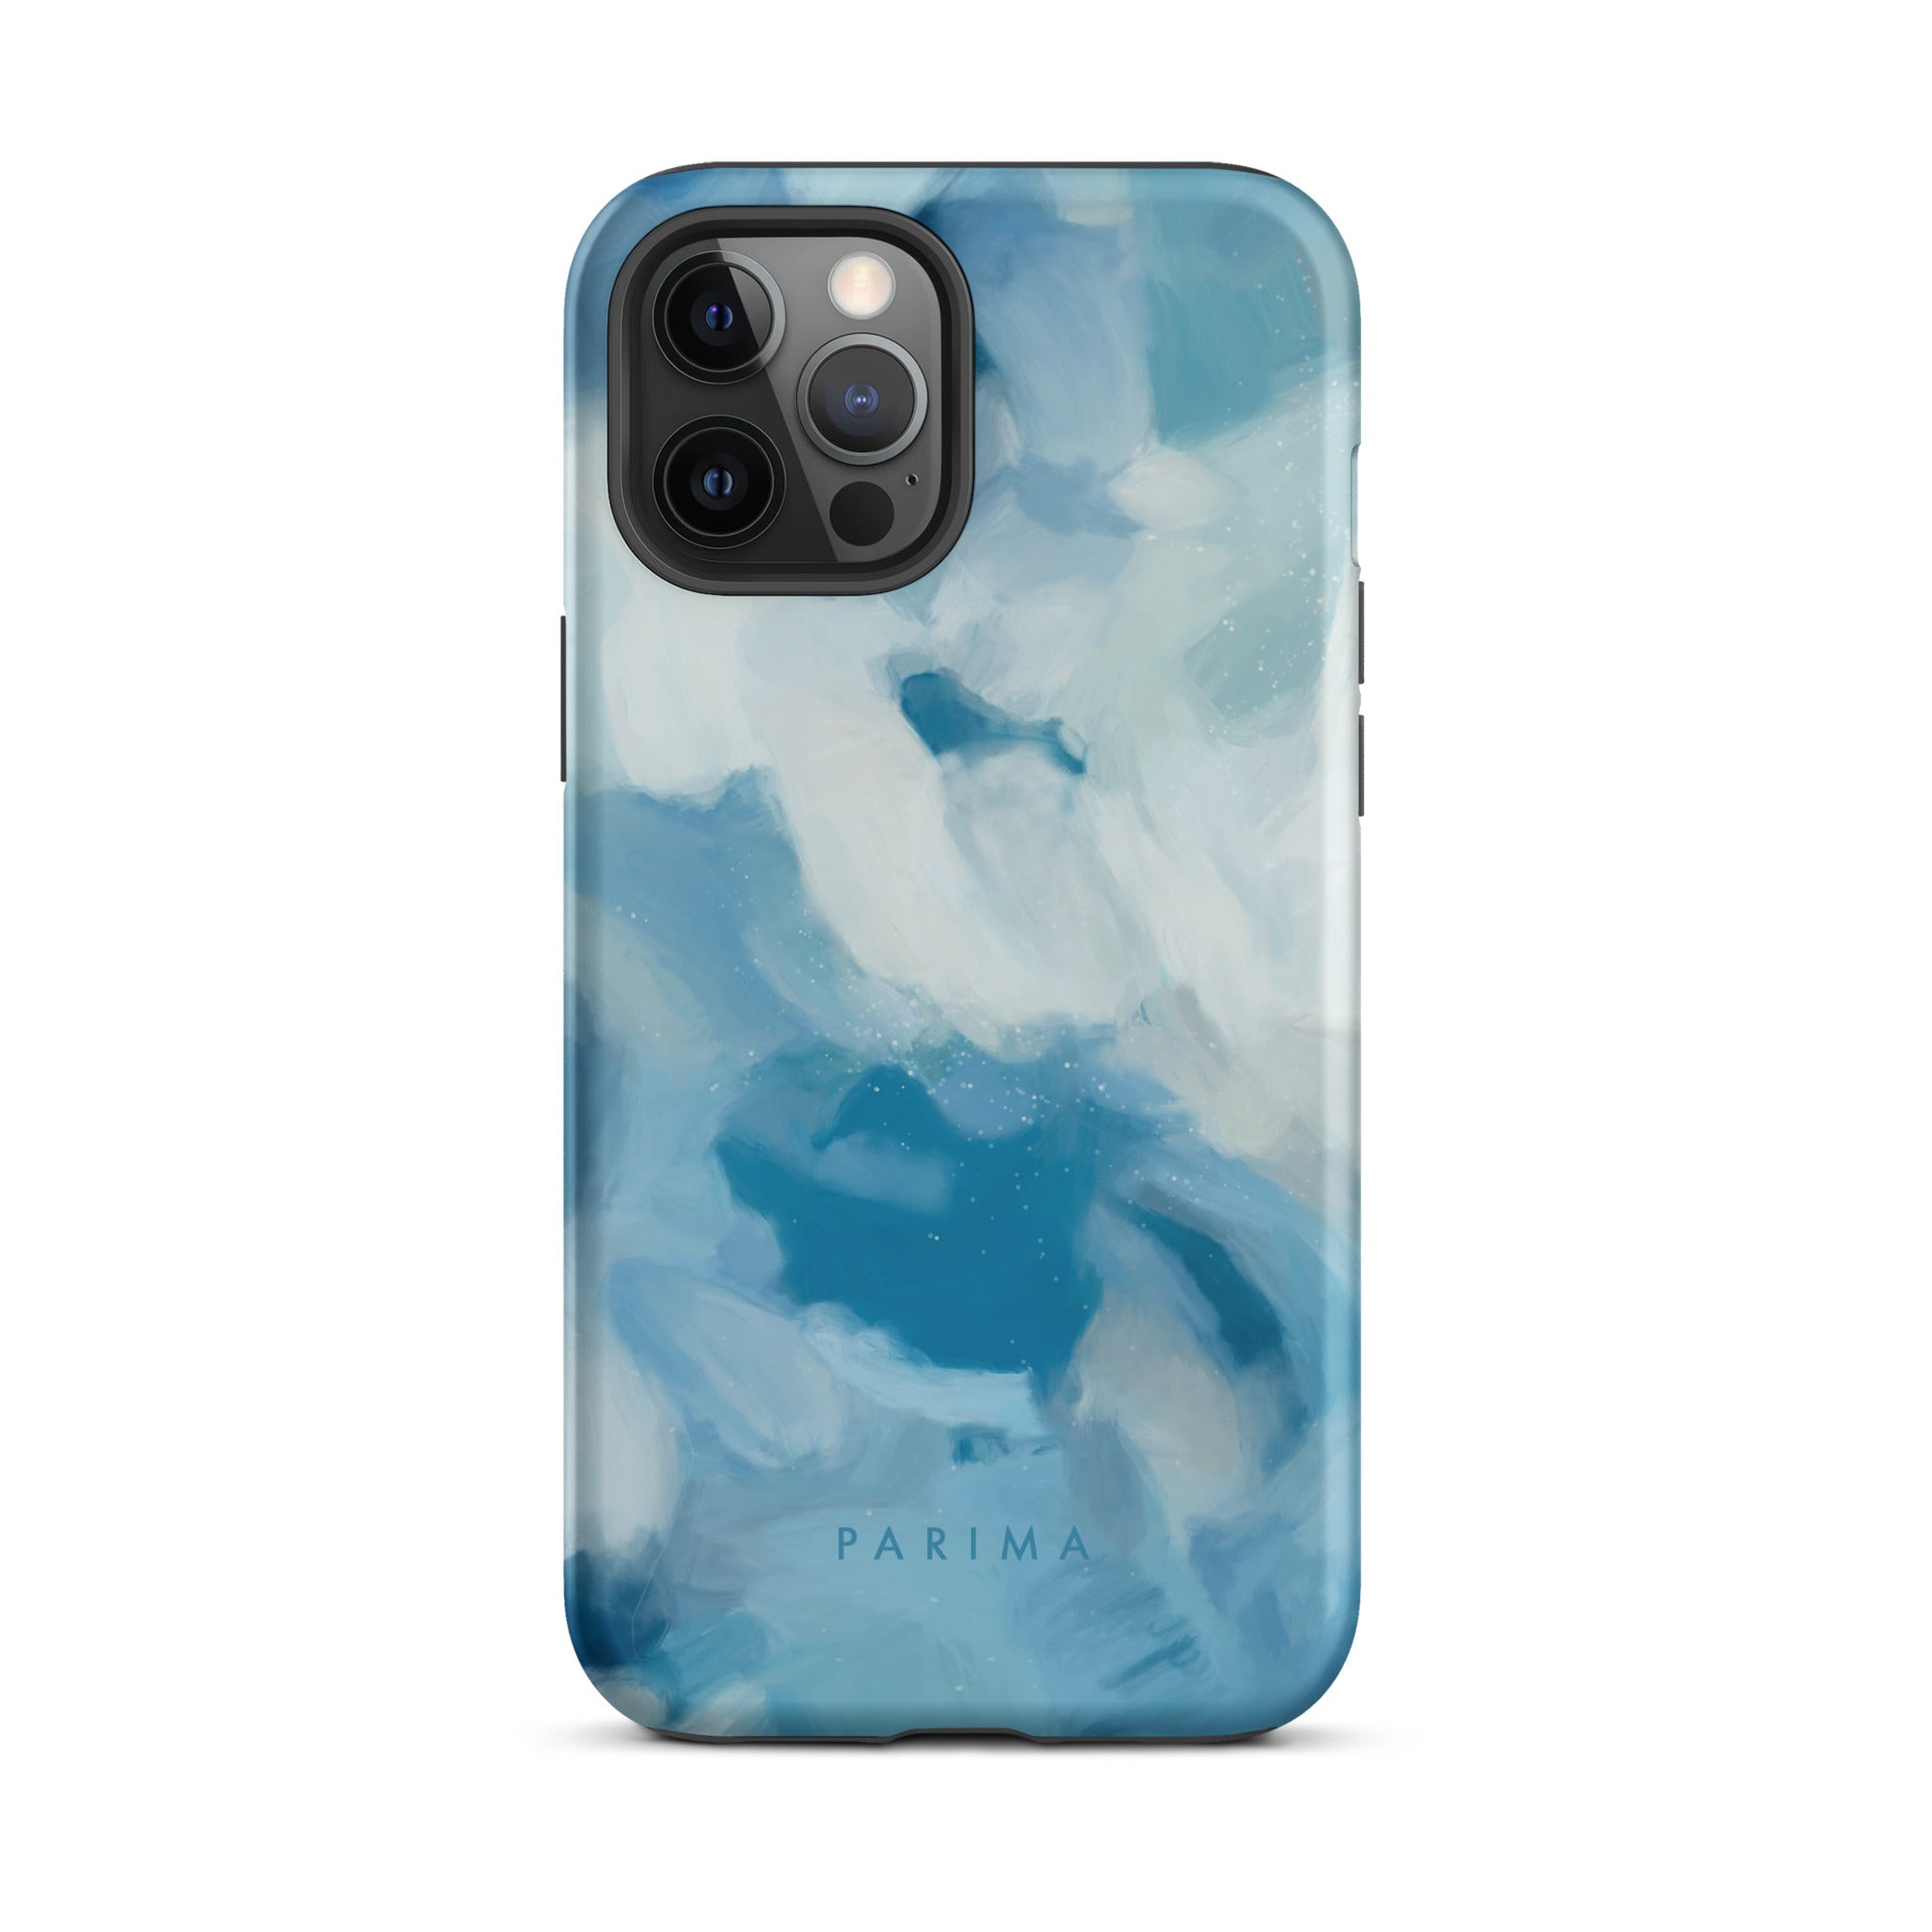 Liviana, blue abstract art - iPhone 12 Pro Max tough case by Parima Studio